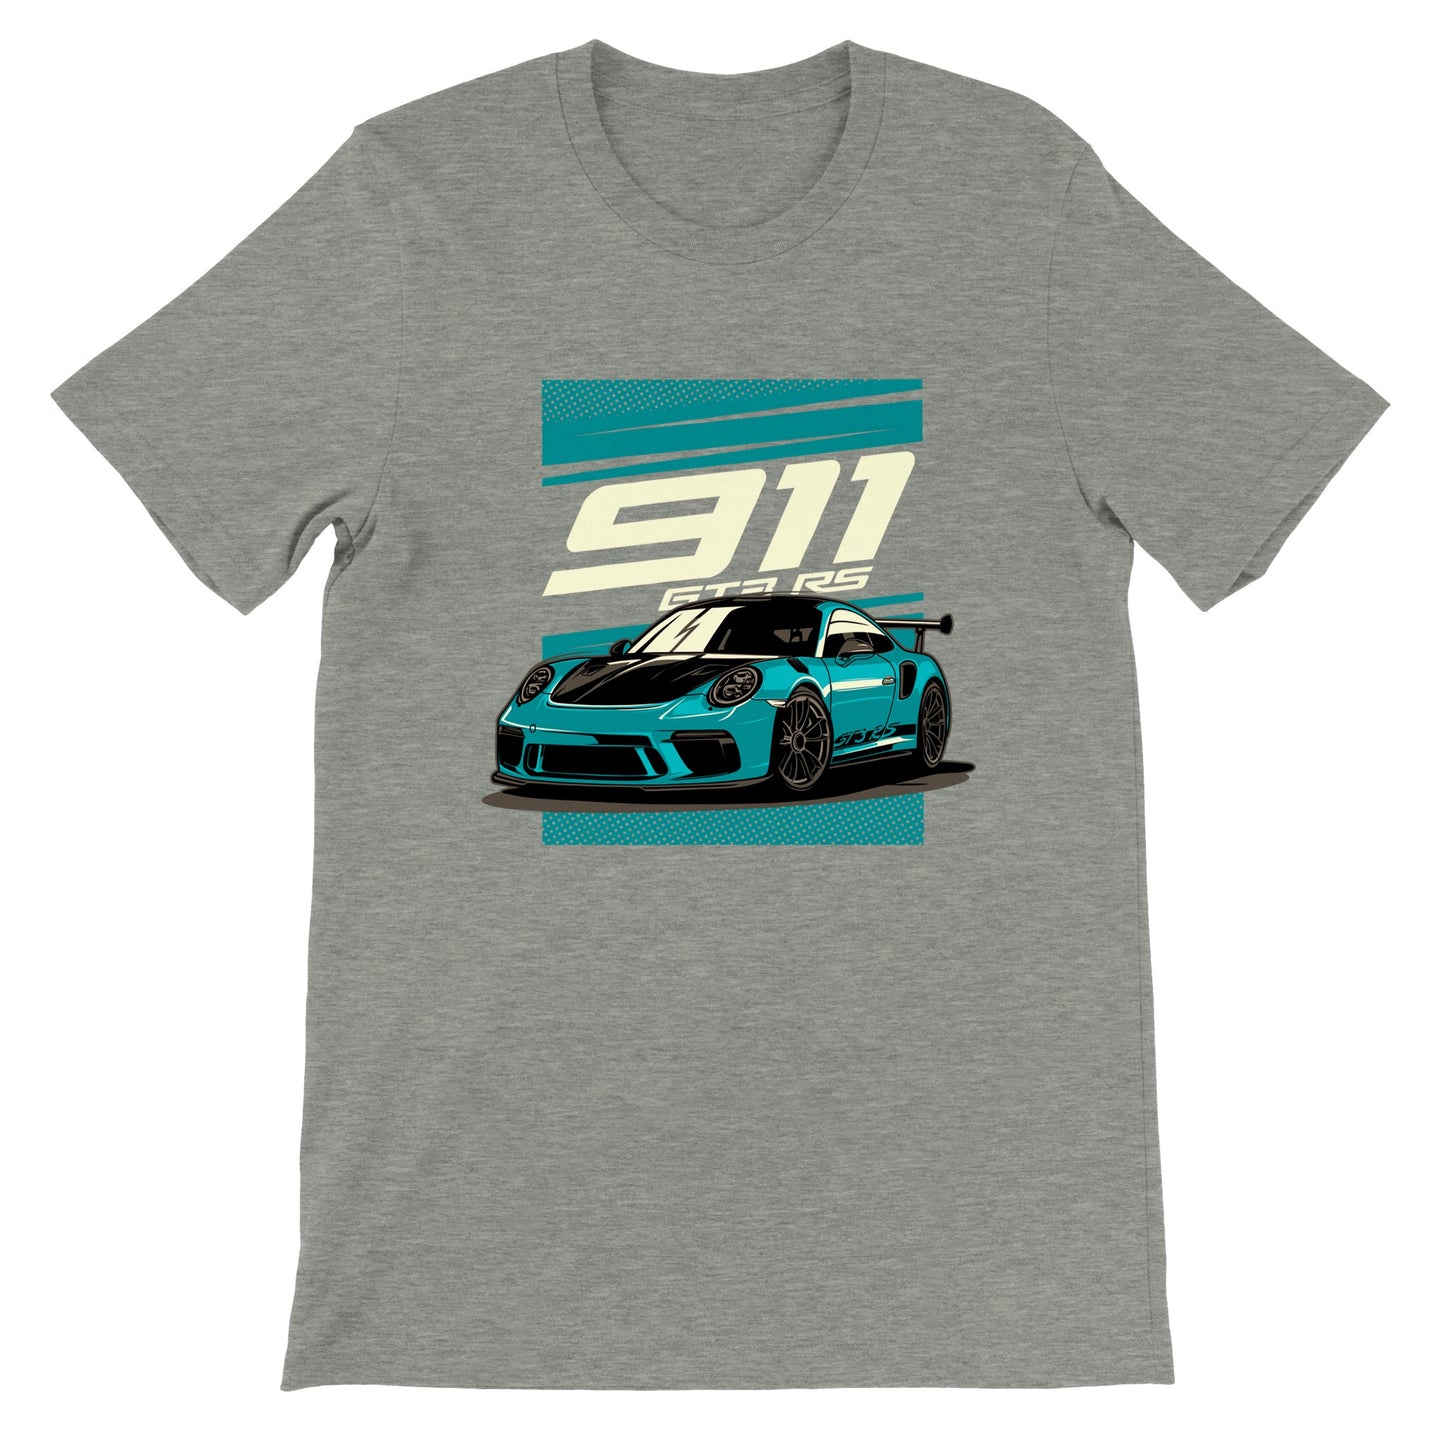 Car T-shirt - The 911 Dream - Artwork - Premium Unisex T-shirt